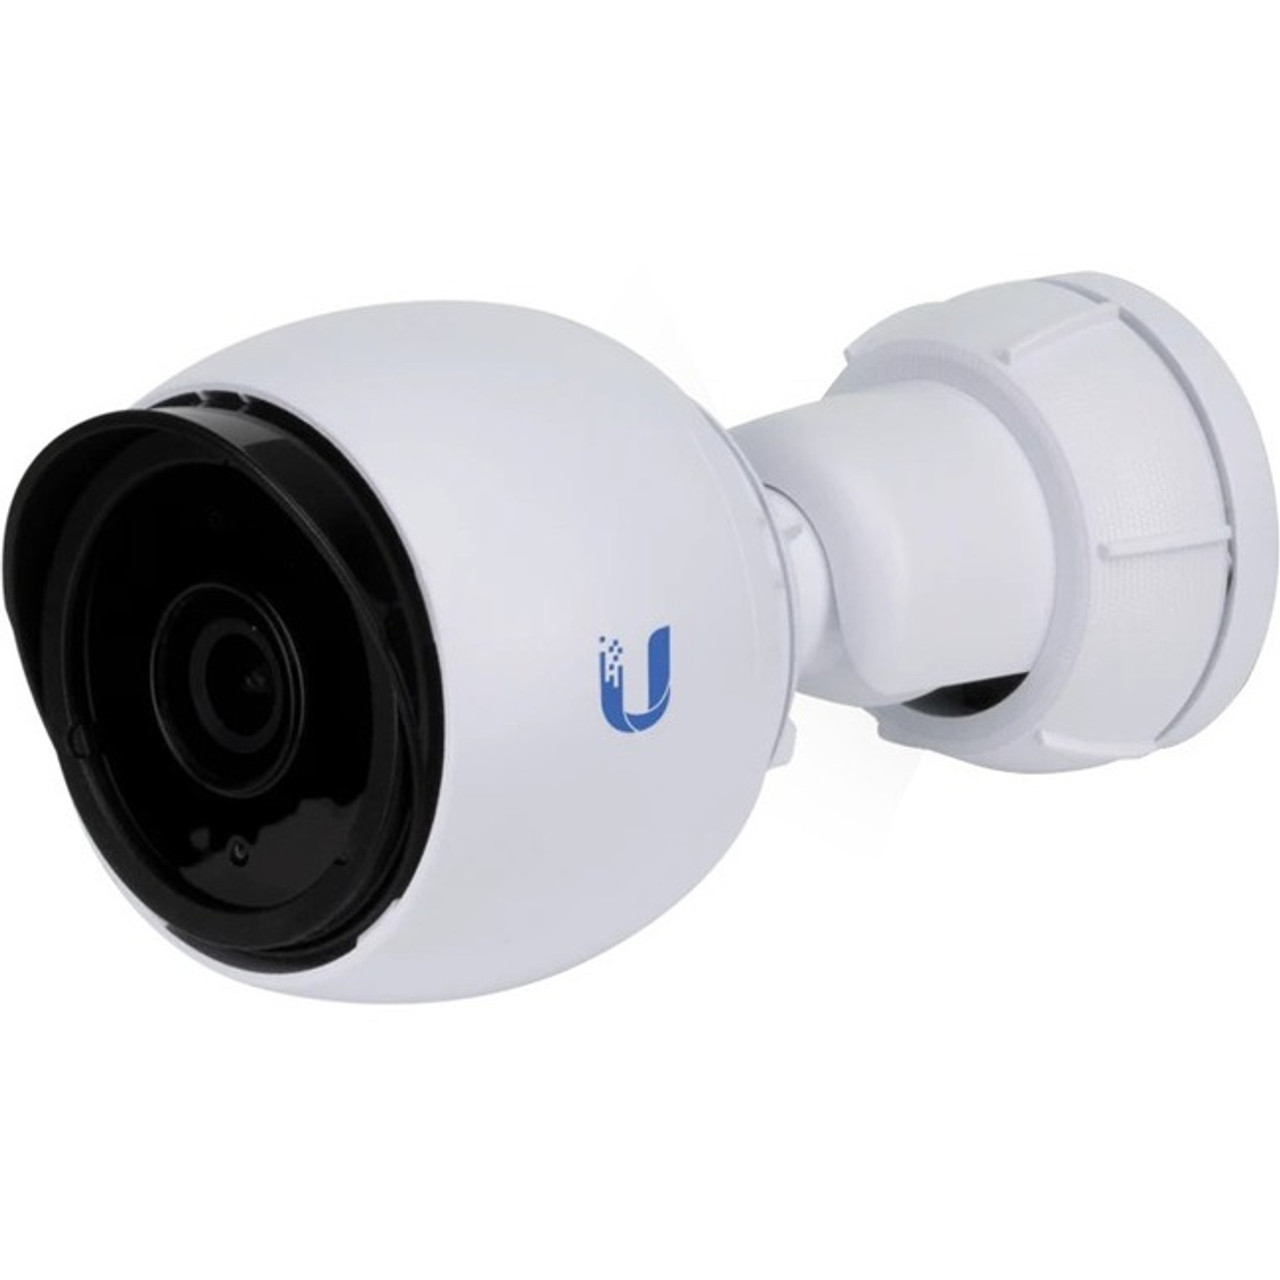 Ubiquiti UniFi Protect UVC-G4-BULLET 4 Megapixel HD Network Camera - Bullet  UVC-G4-BULLET